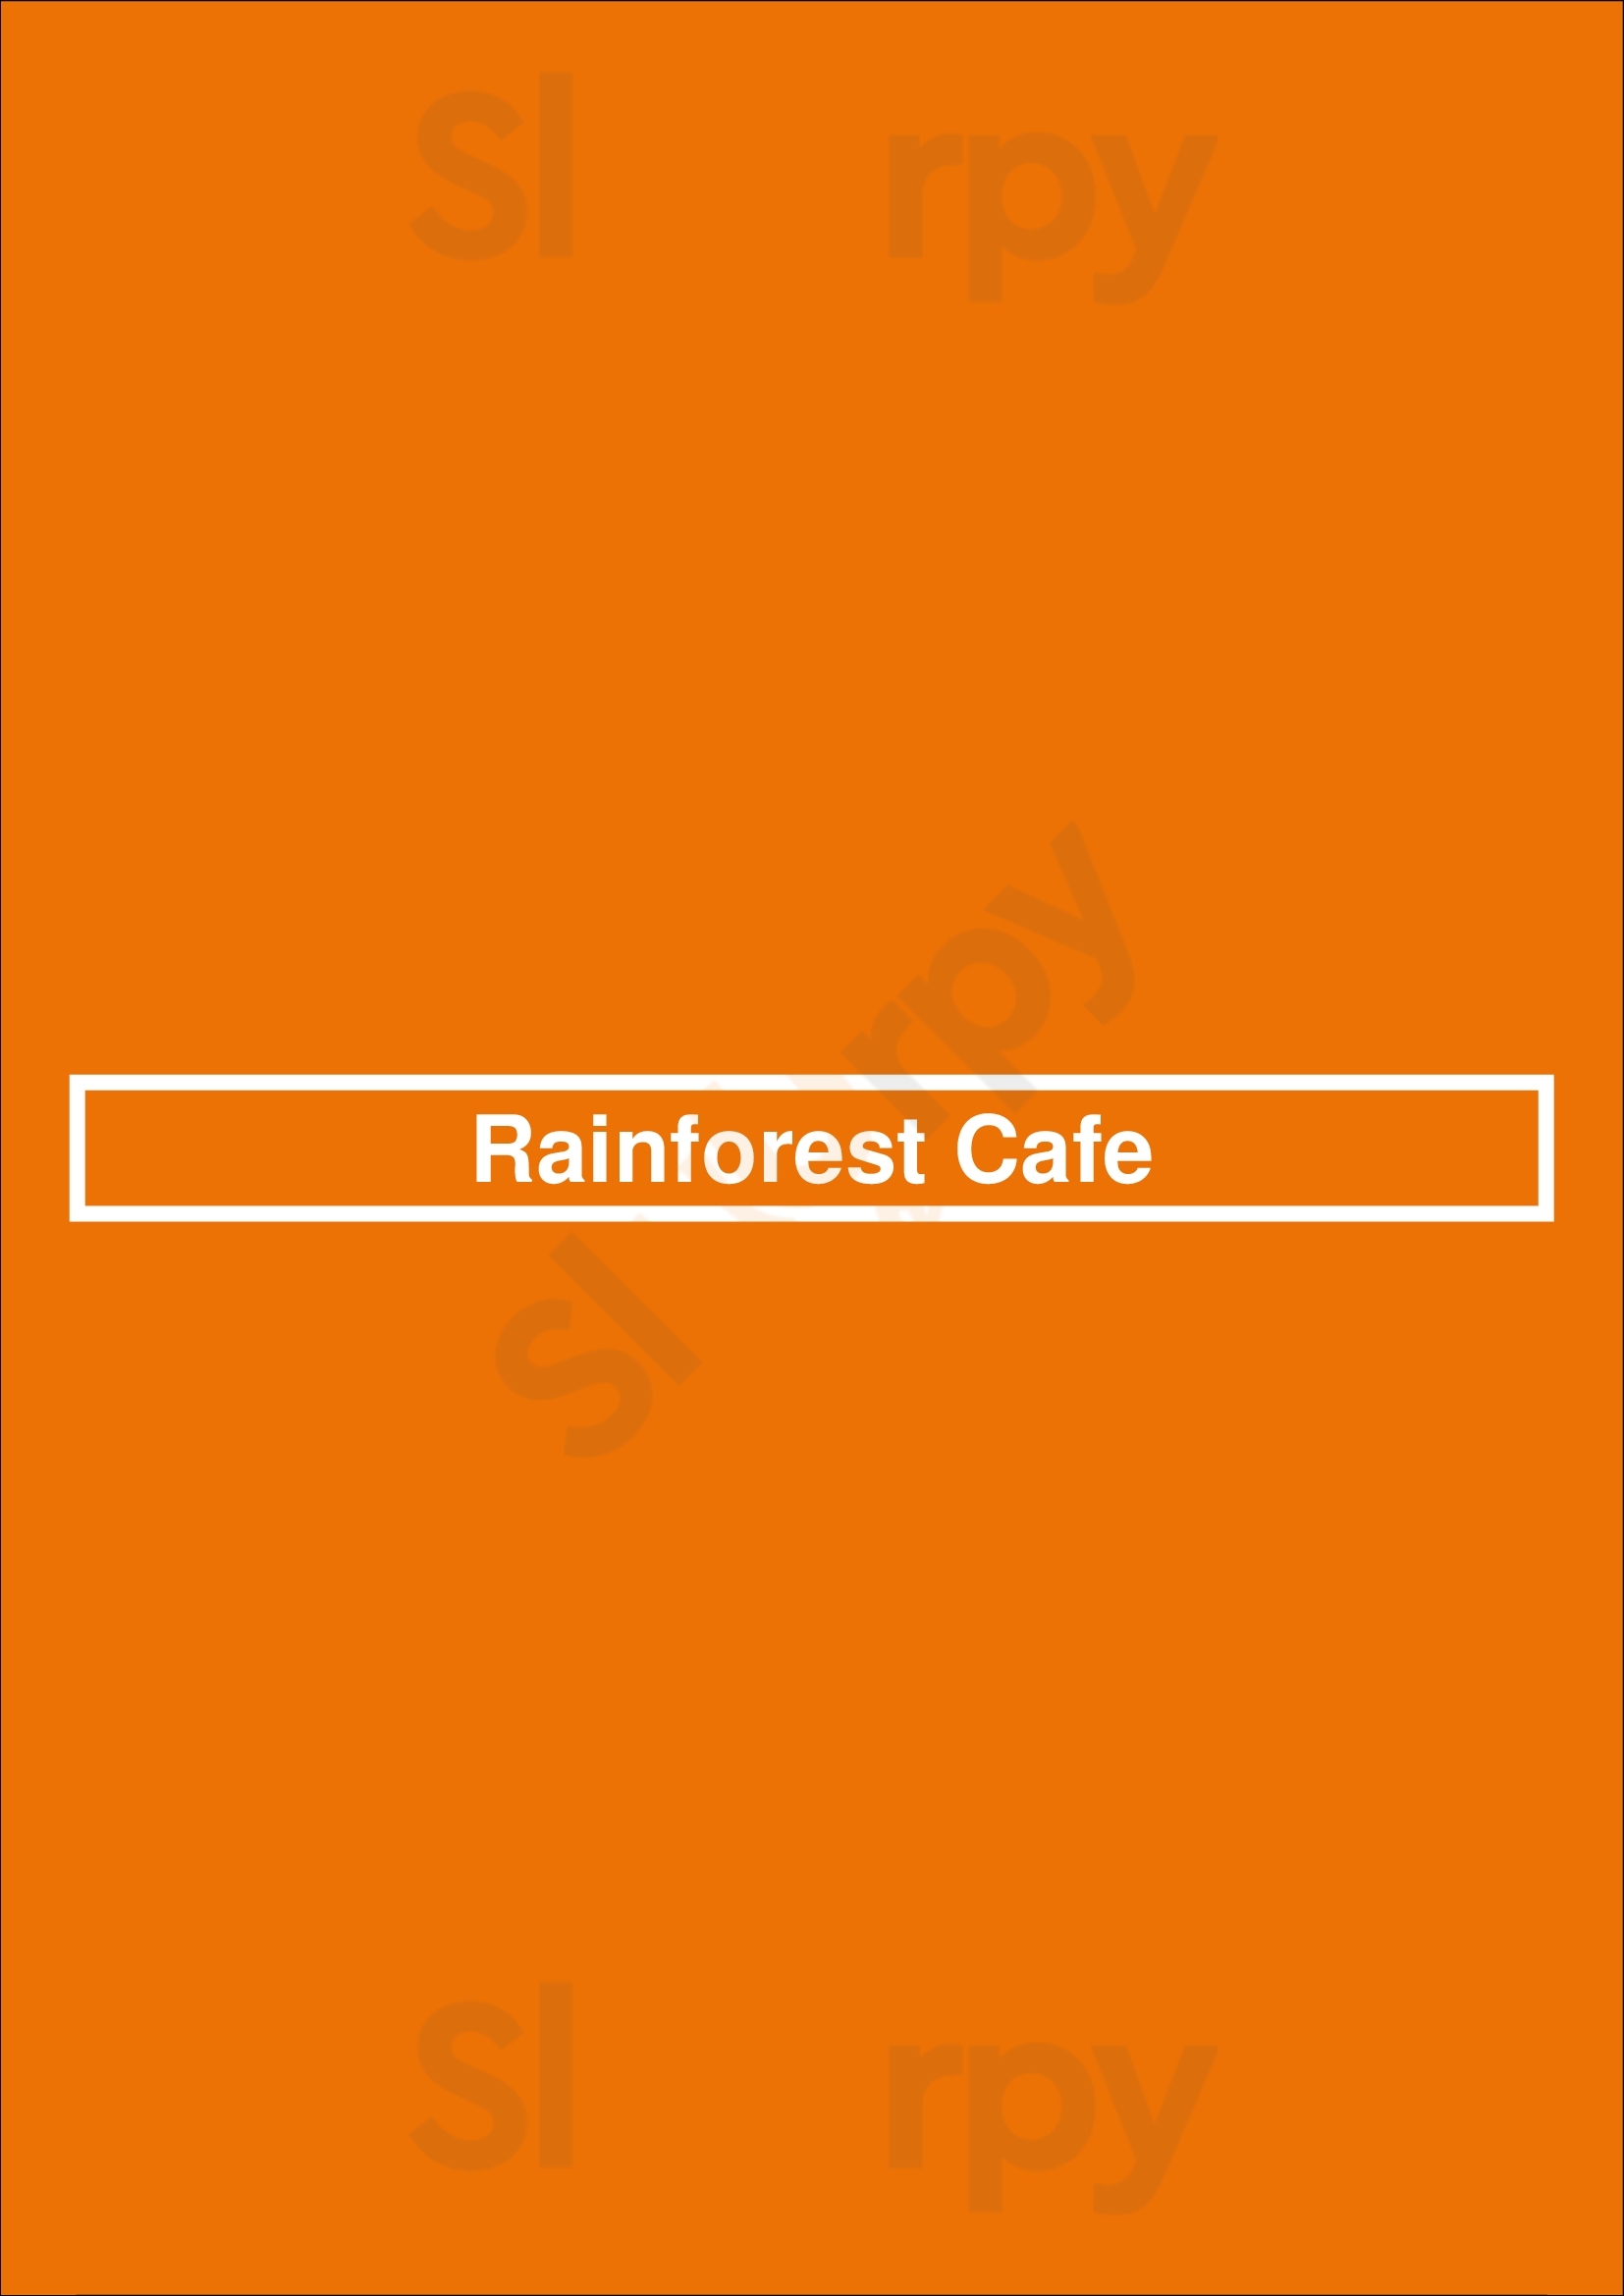 Rainforest Cafe San Antonio Menu - 1